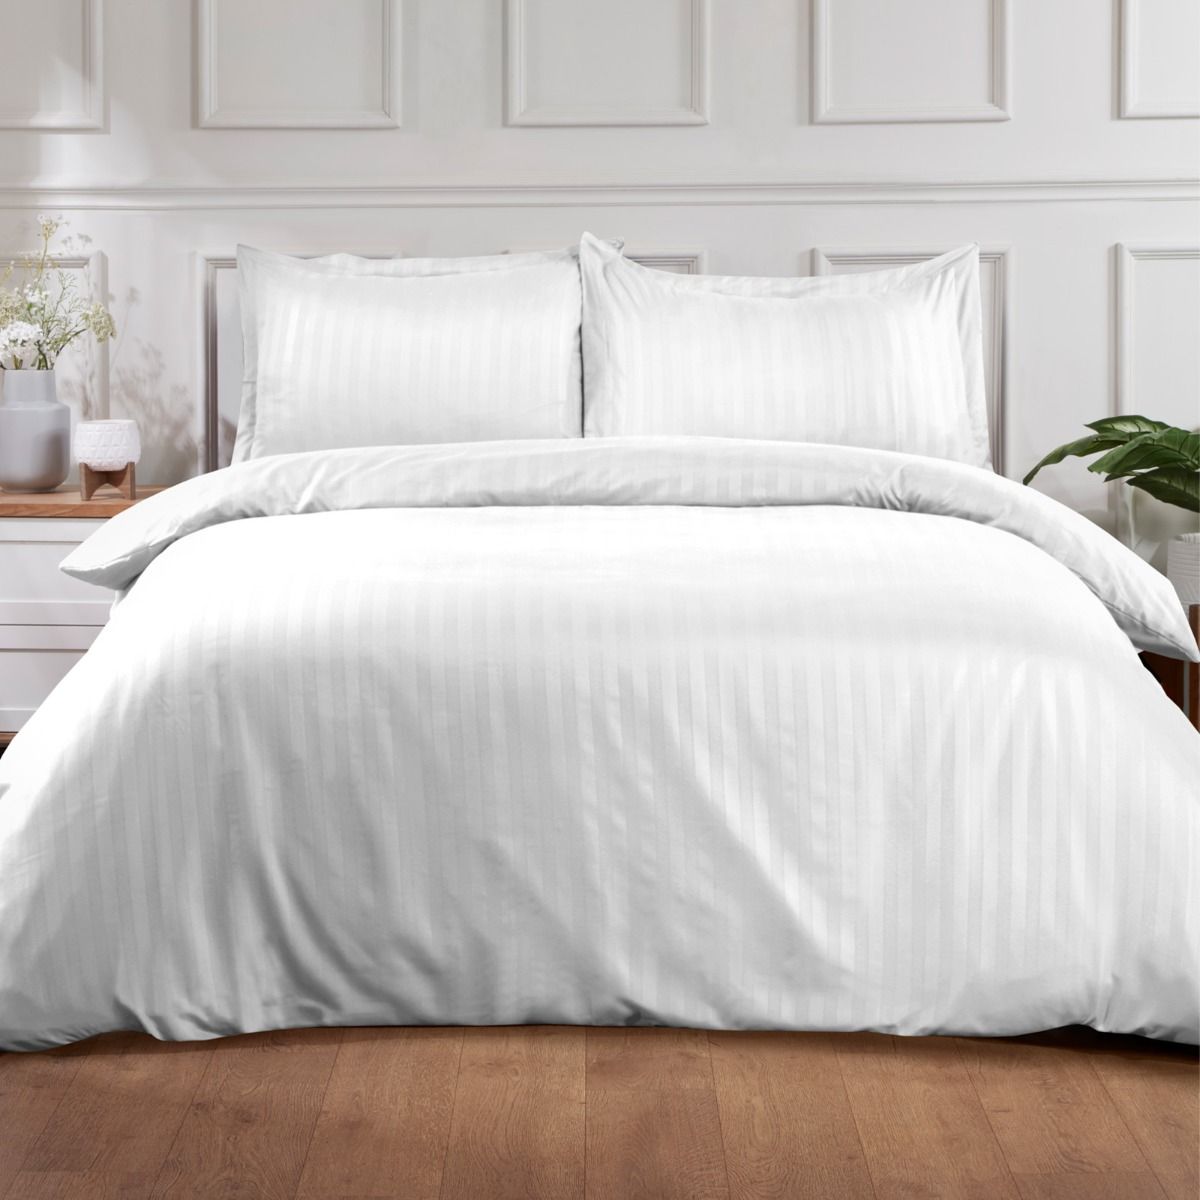 Brentfords Satin Stripe Duvet Double Cover with Pillow Case Set - White